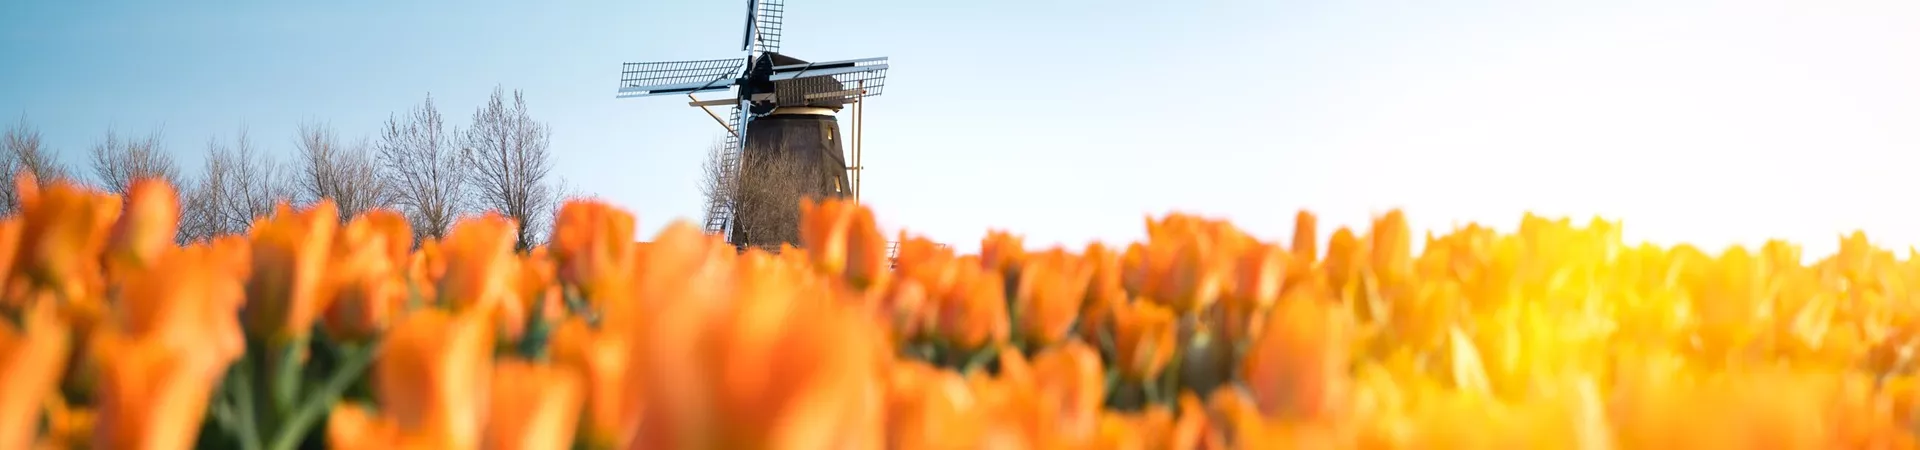 Windmill In Tulip Field in the Netherlands